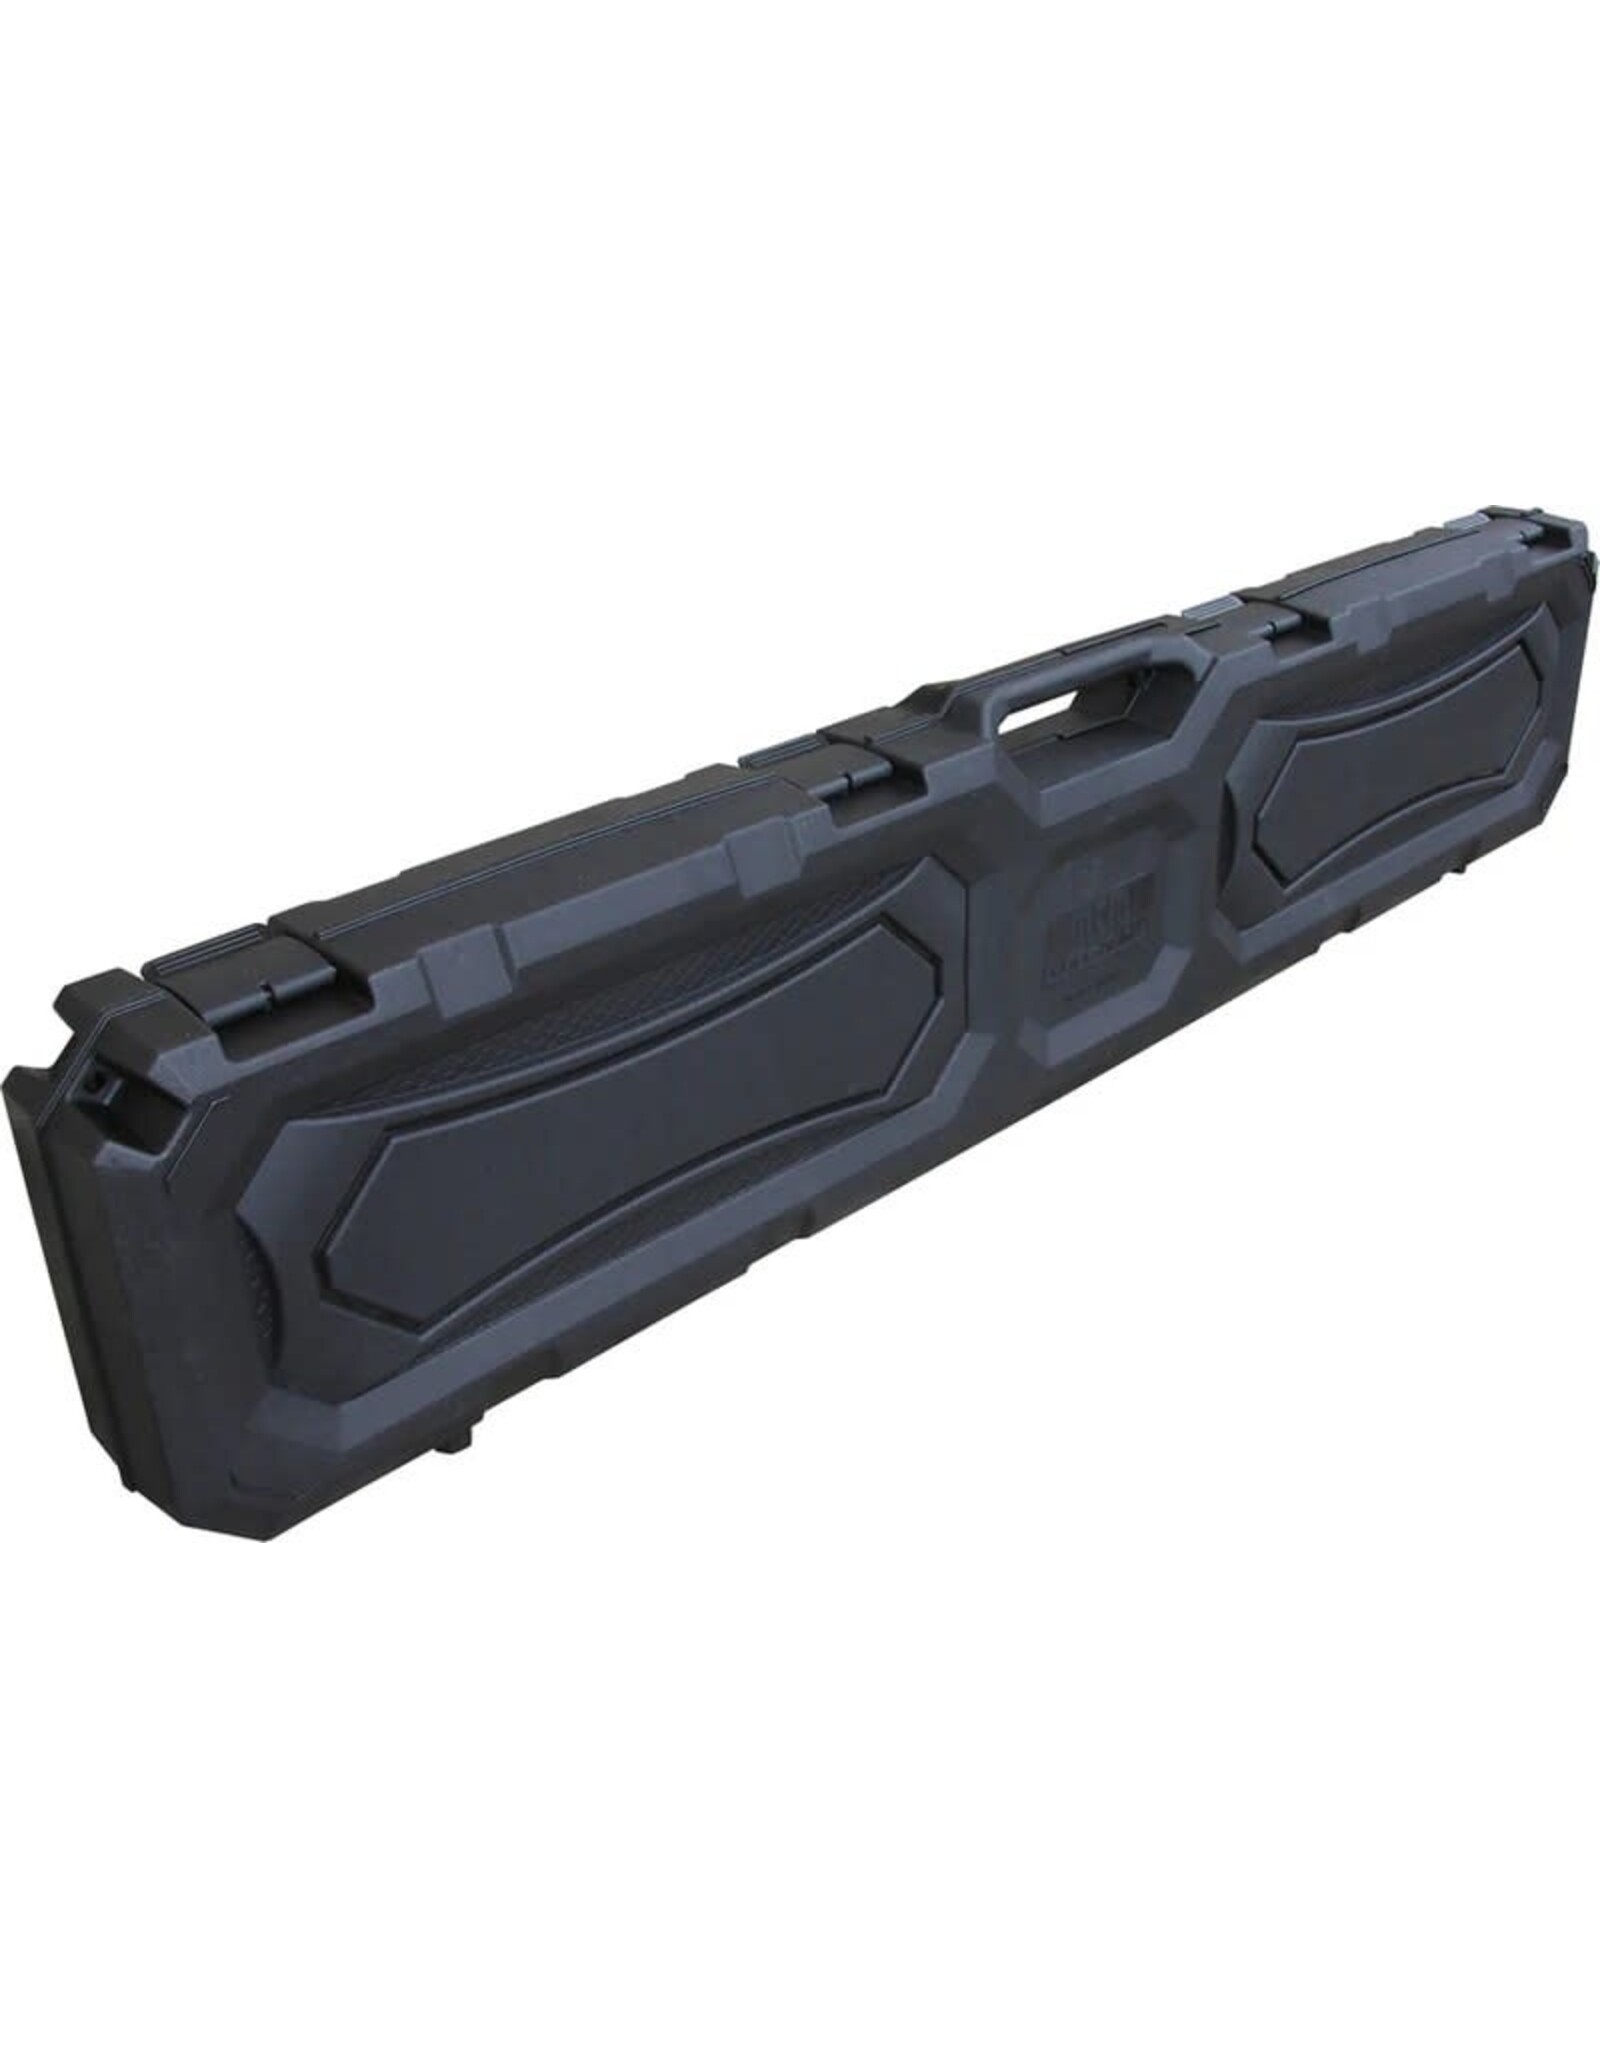 MTM Case-Gard™ Single Scoped Rifle Case - 51"